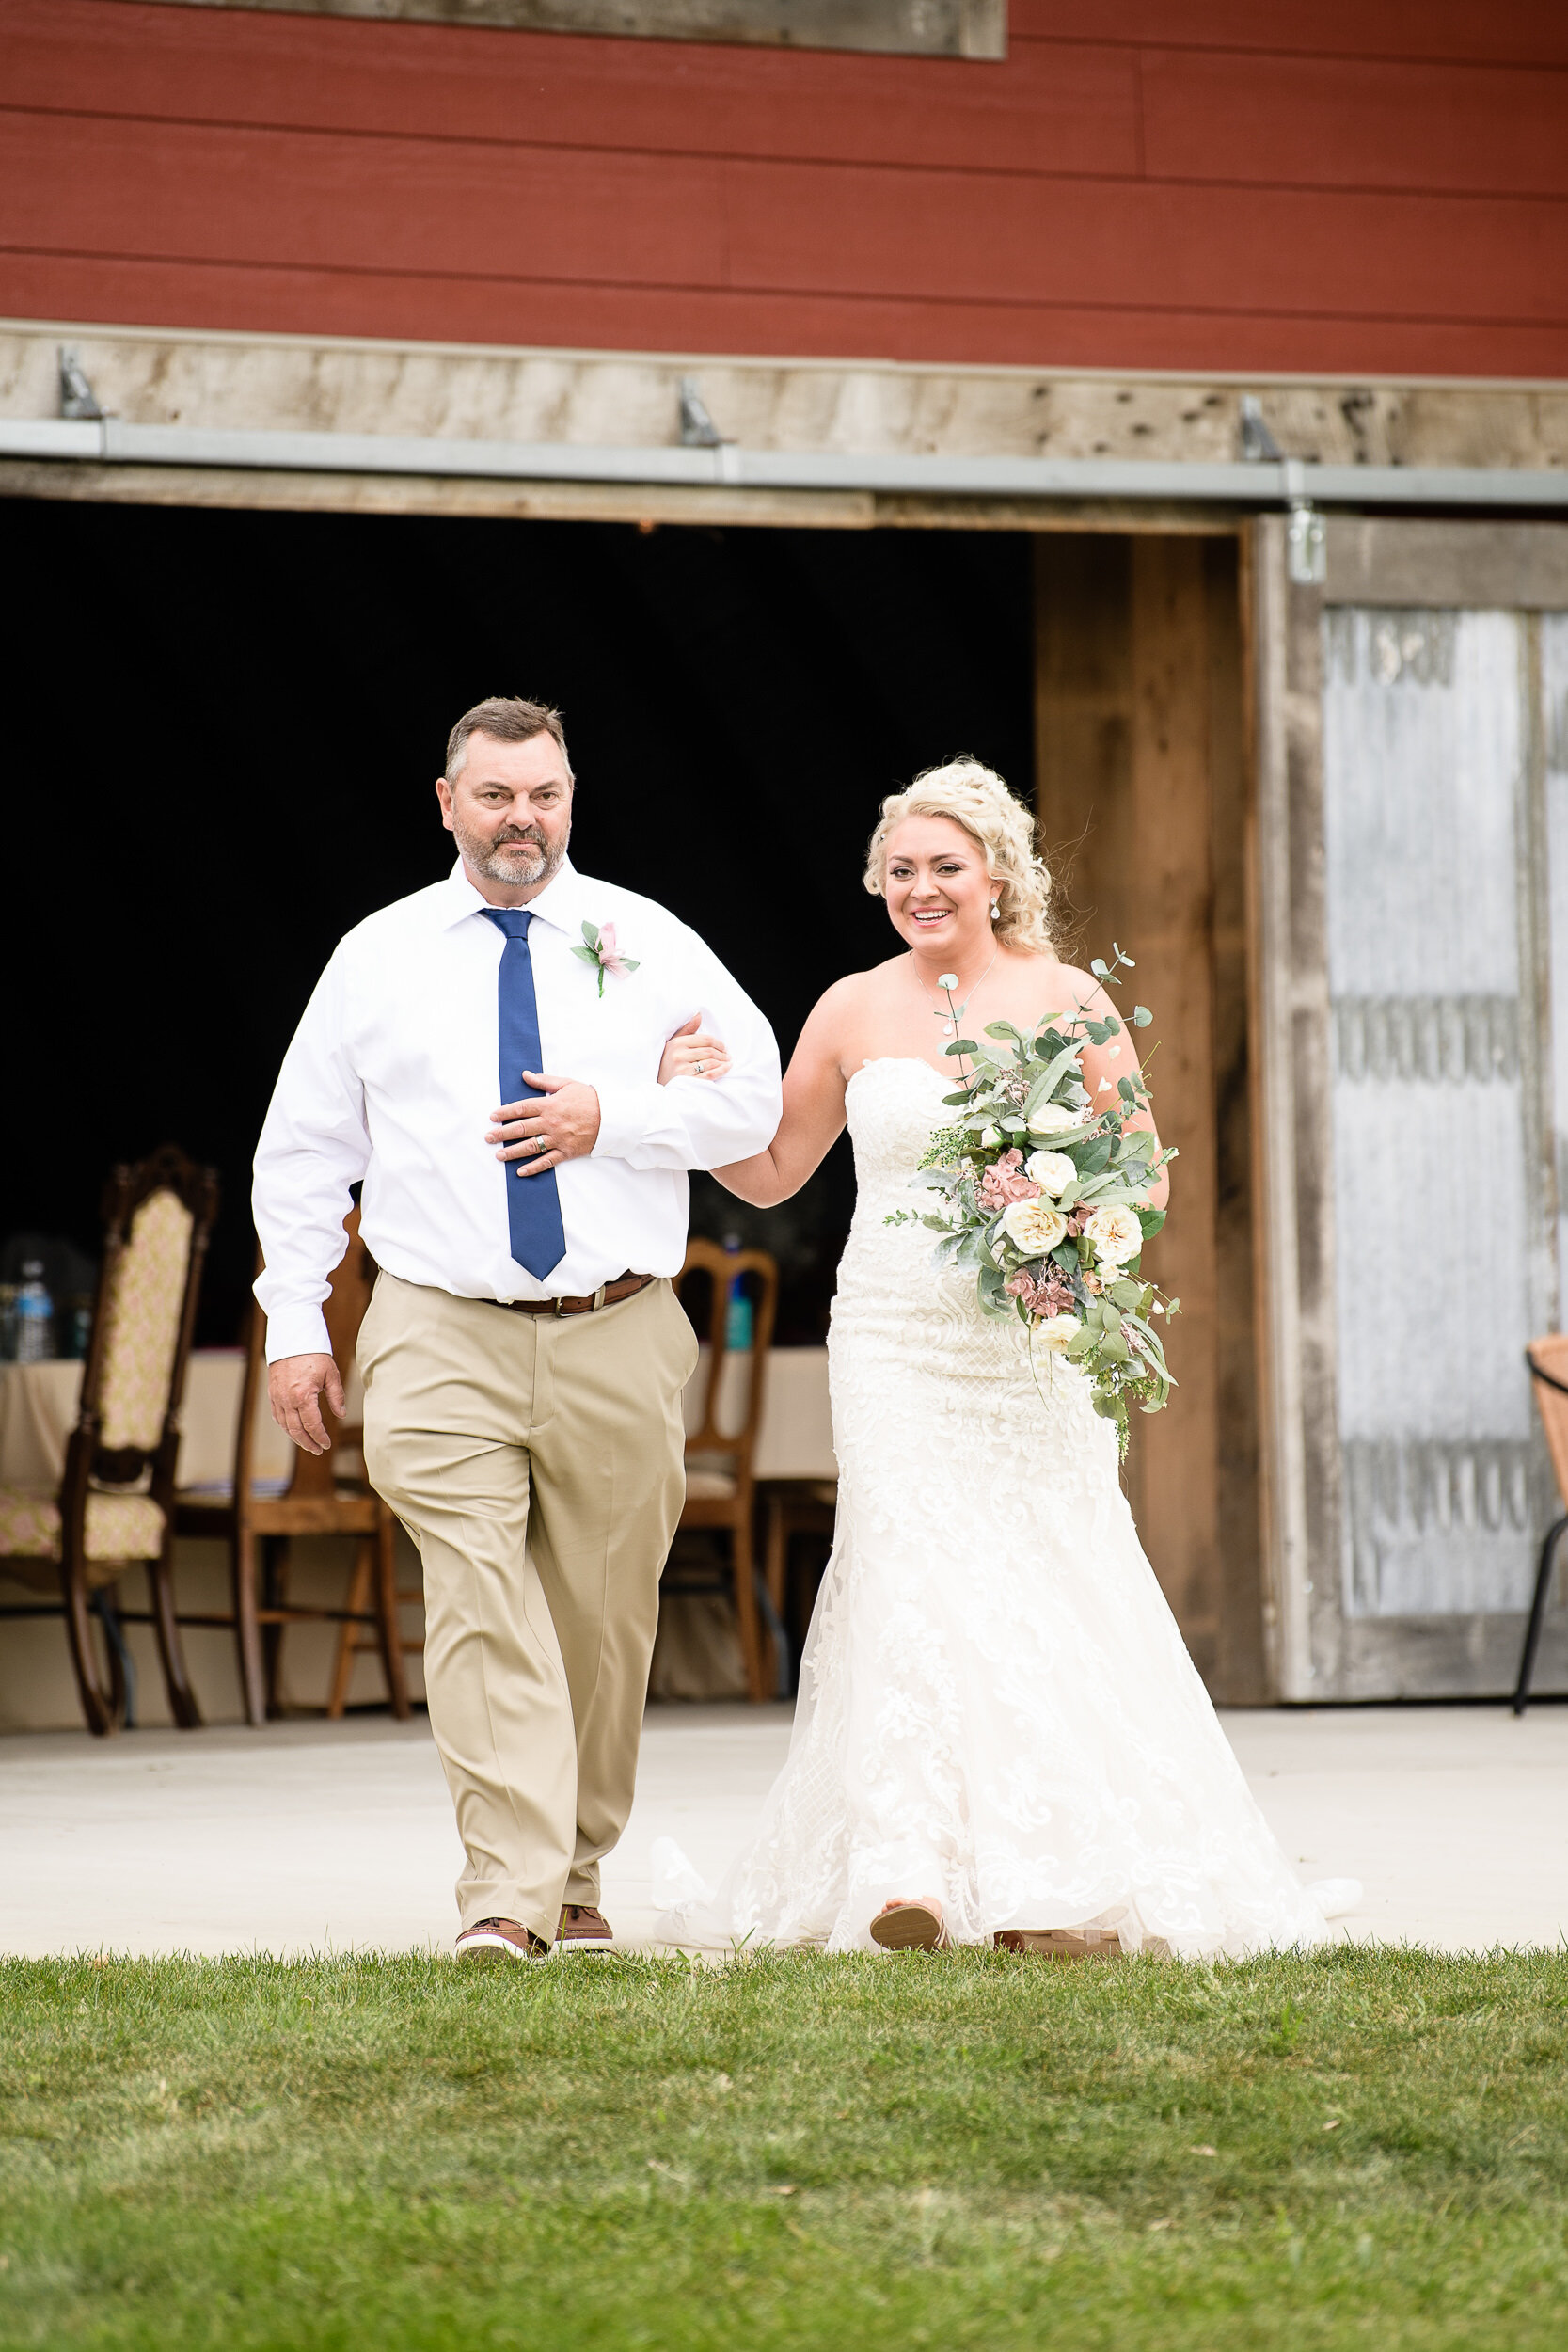 Four Corners Winery Wedding Venue - Northwest Indiana Wedding Photographer Region Weddings